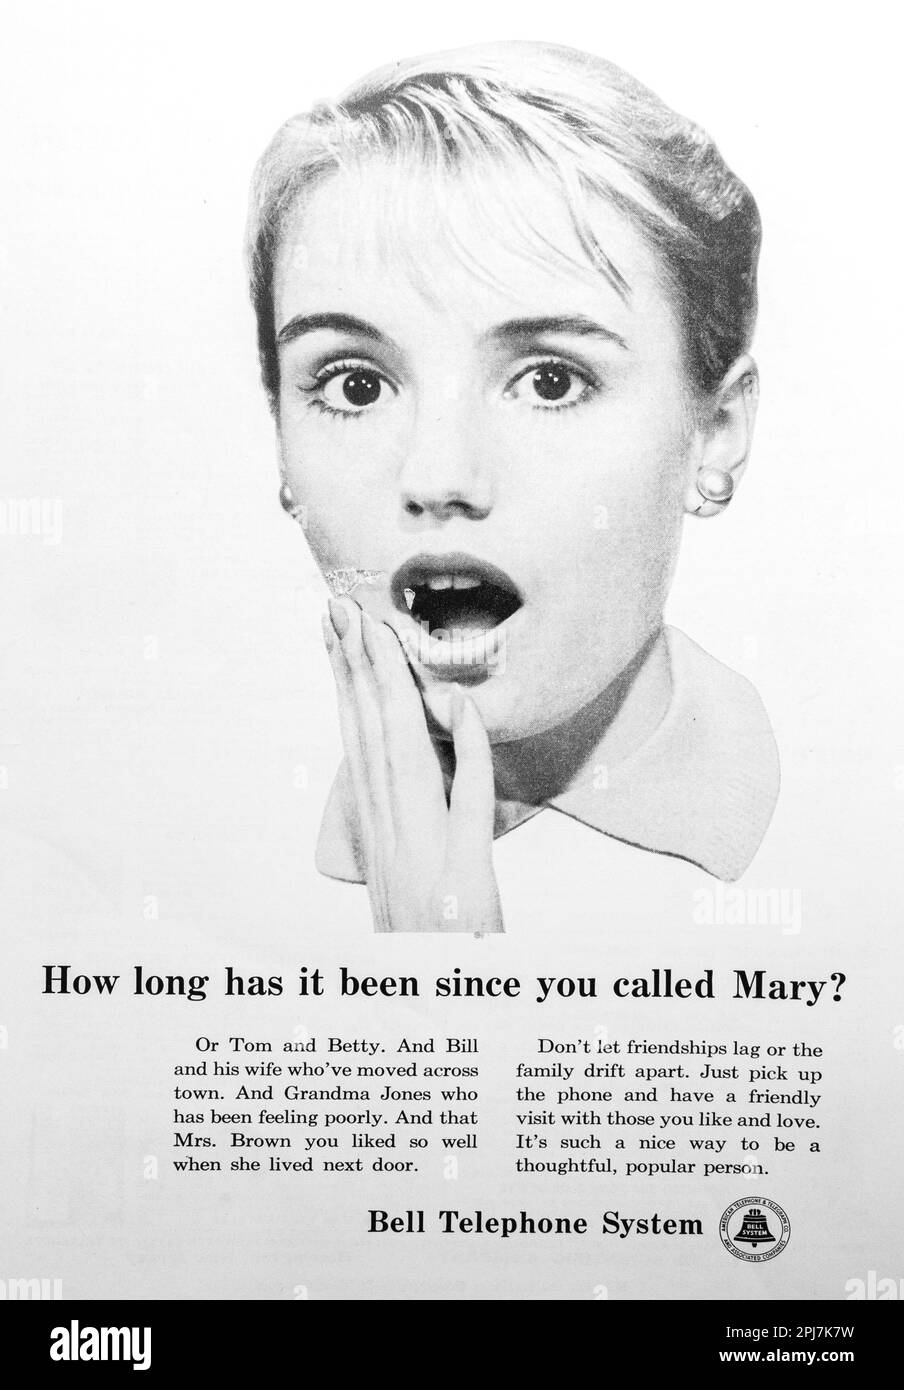 Bell Telephone System - Mary advert in a Natgeo magazine, November 1959 Stock Photo